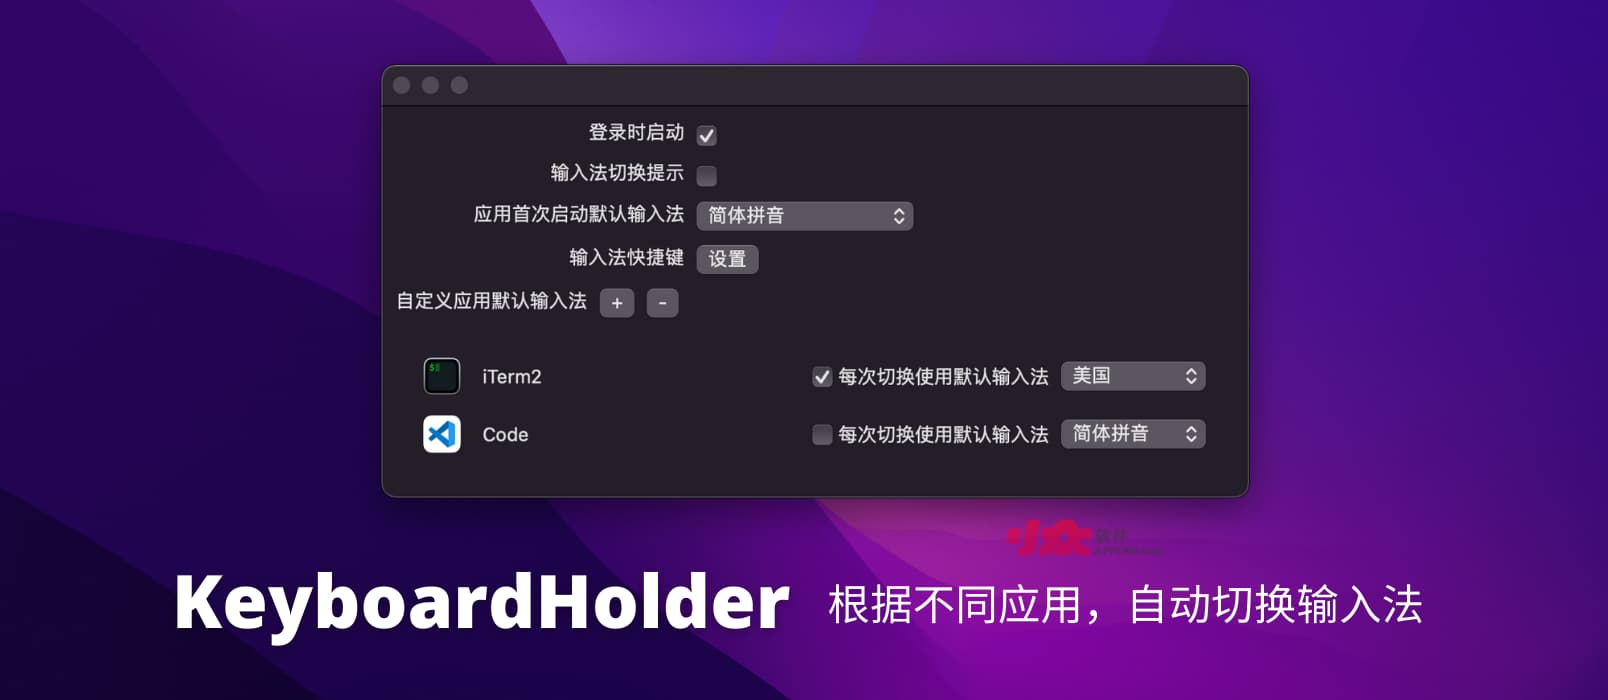 KeyboardHolder - 根据不同应用，自动切换输入法[macOS]